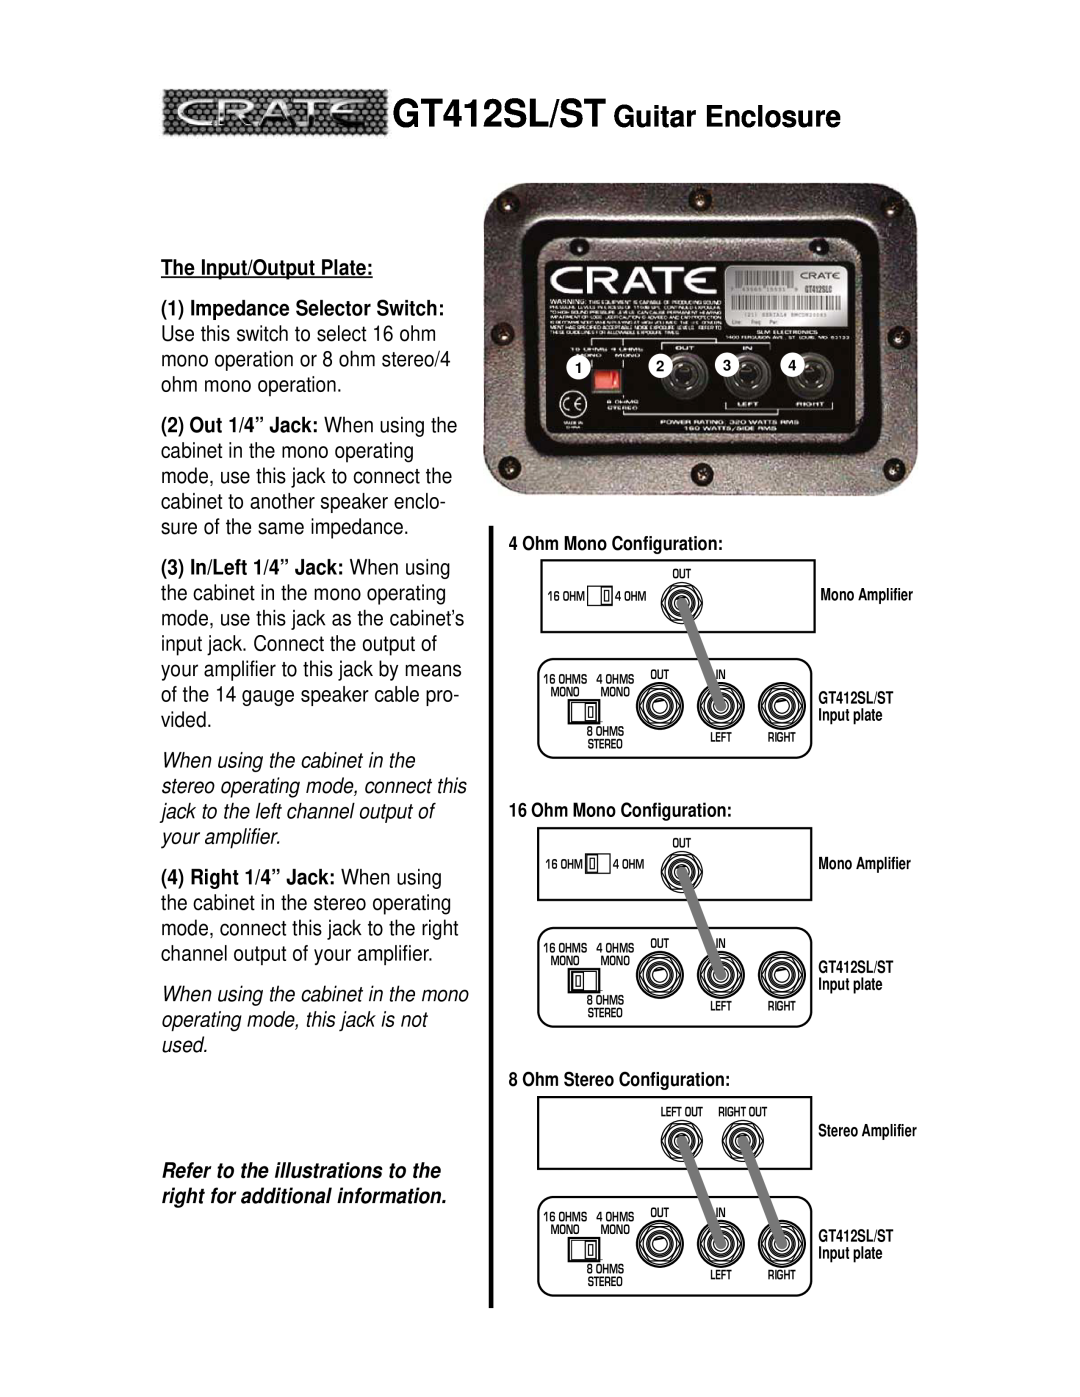 Crate Amplifiers GT412ST manual GT412SL/ST Guitar Enclosure, The Input/Output Plate, Ohm Mono Configuration 